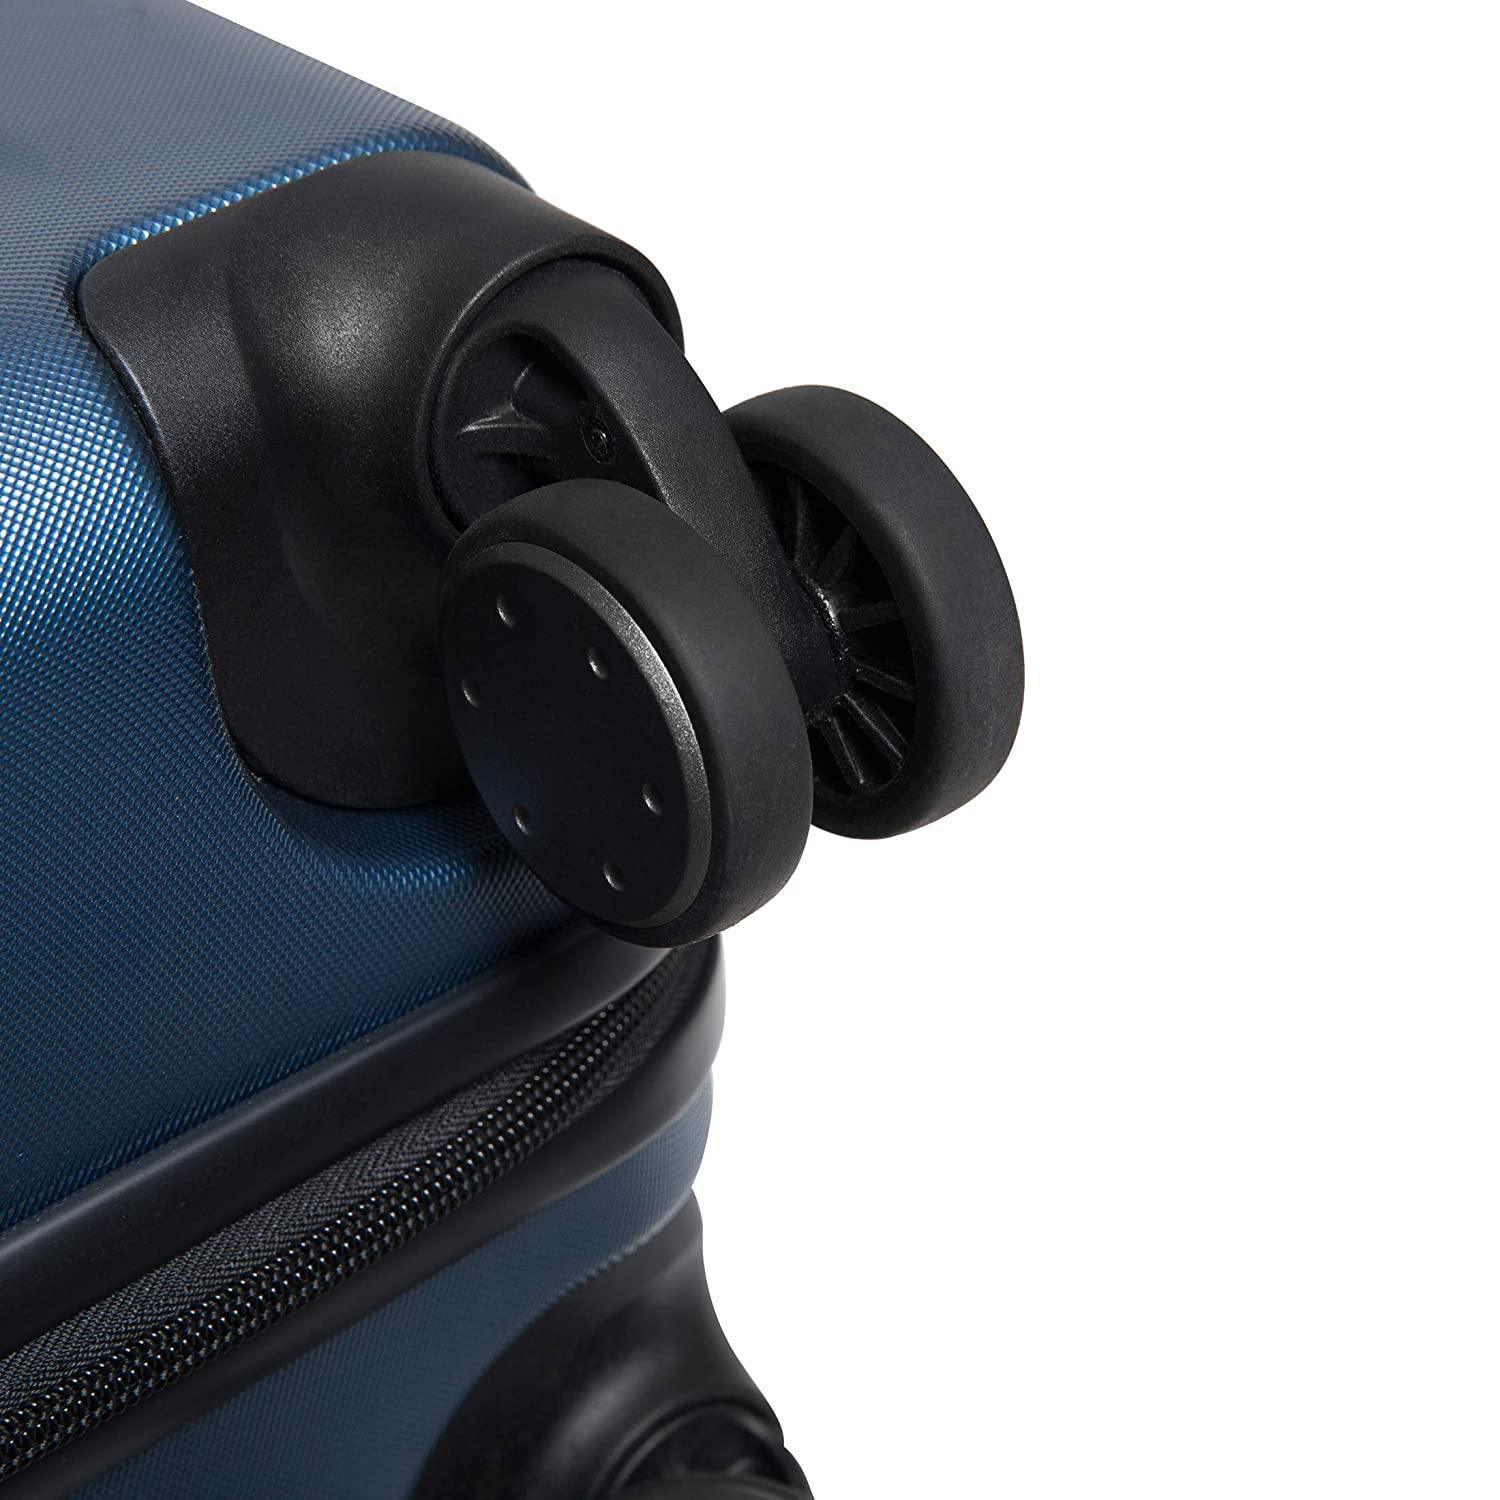 Mi Hardsided Check-in Luggage 24" (Blue/Grey)-Luggage-dealsplant